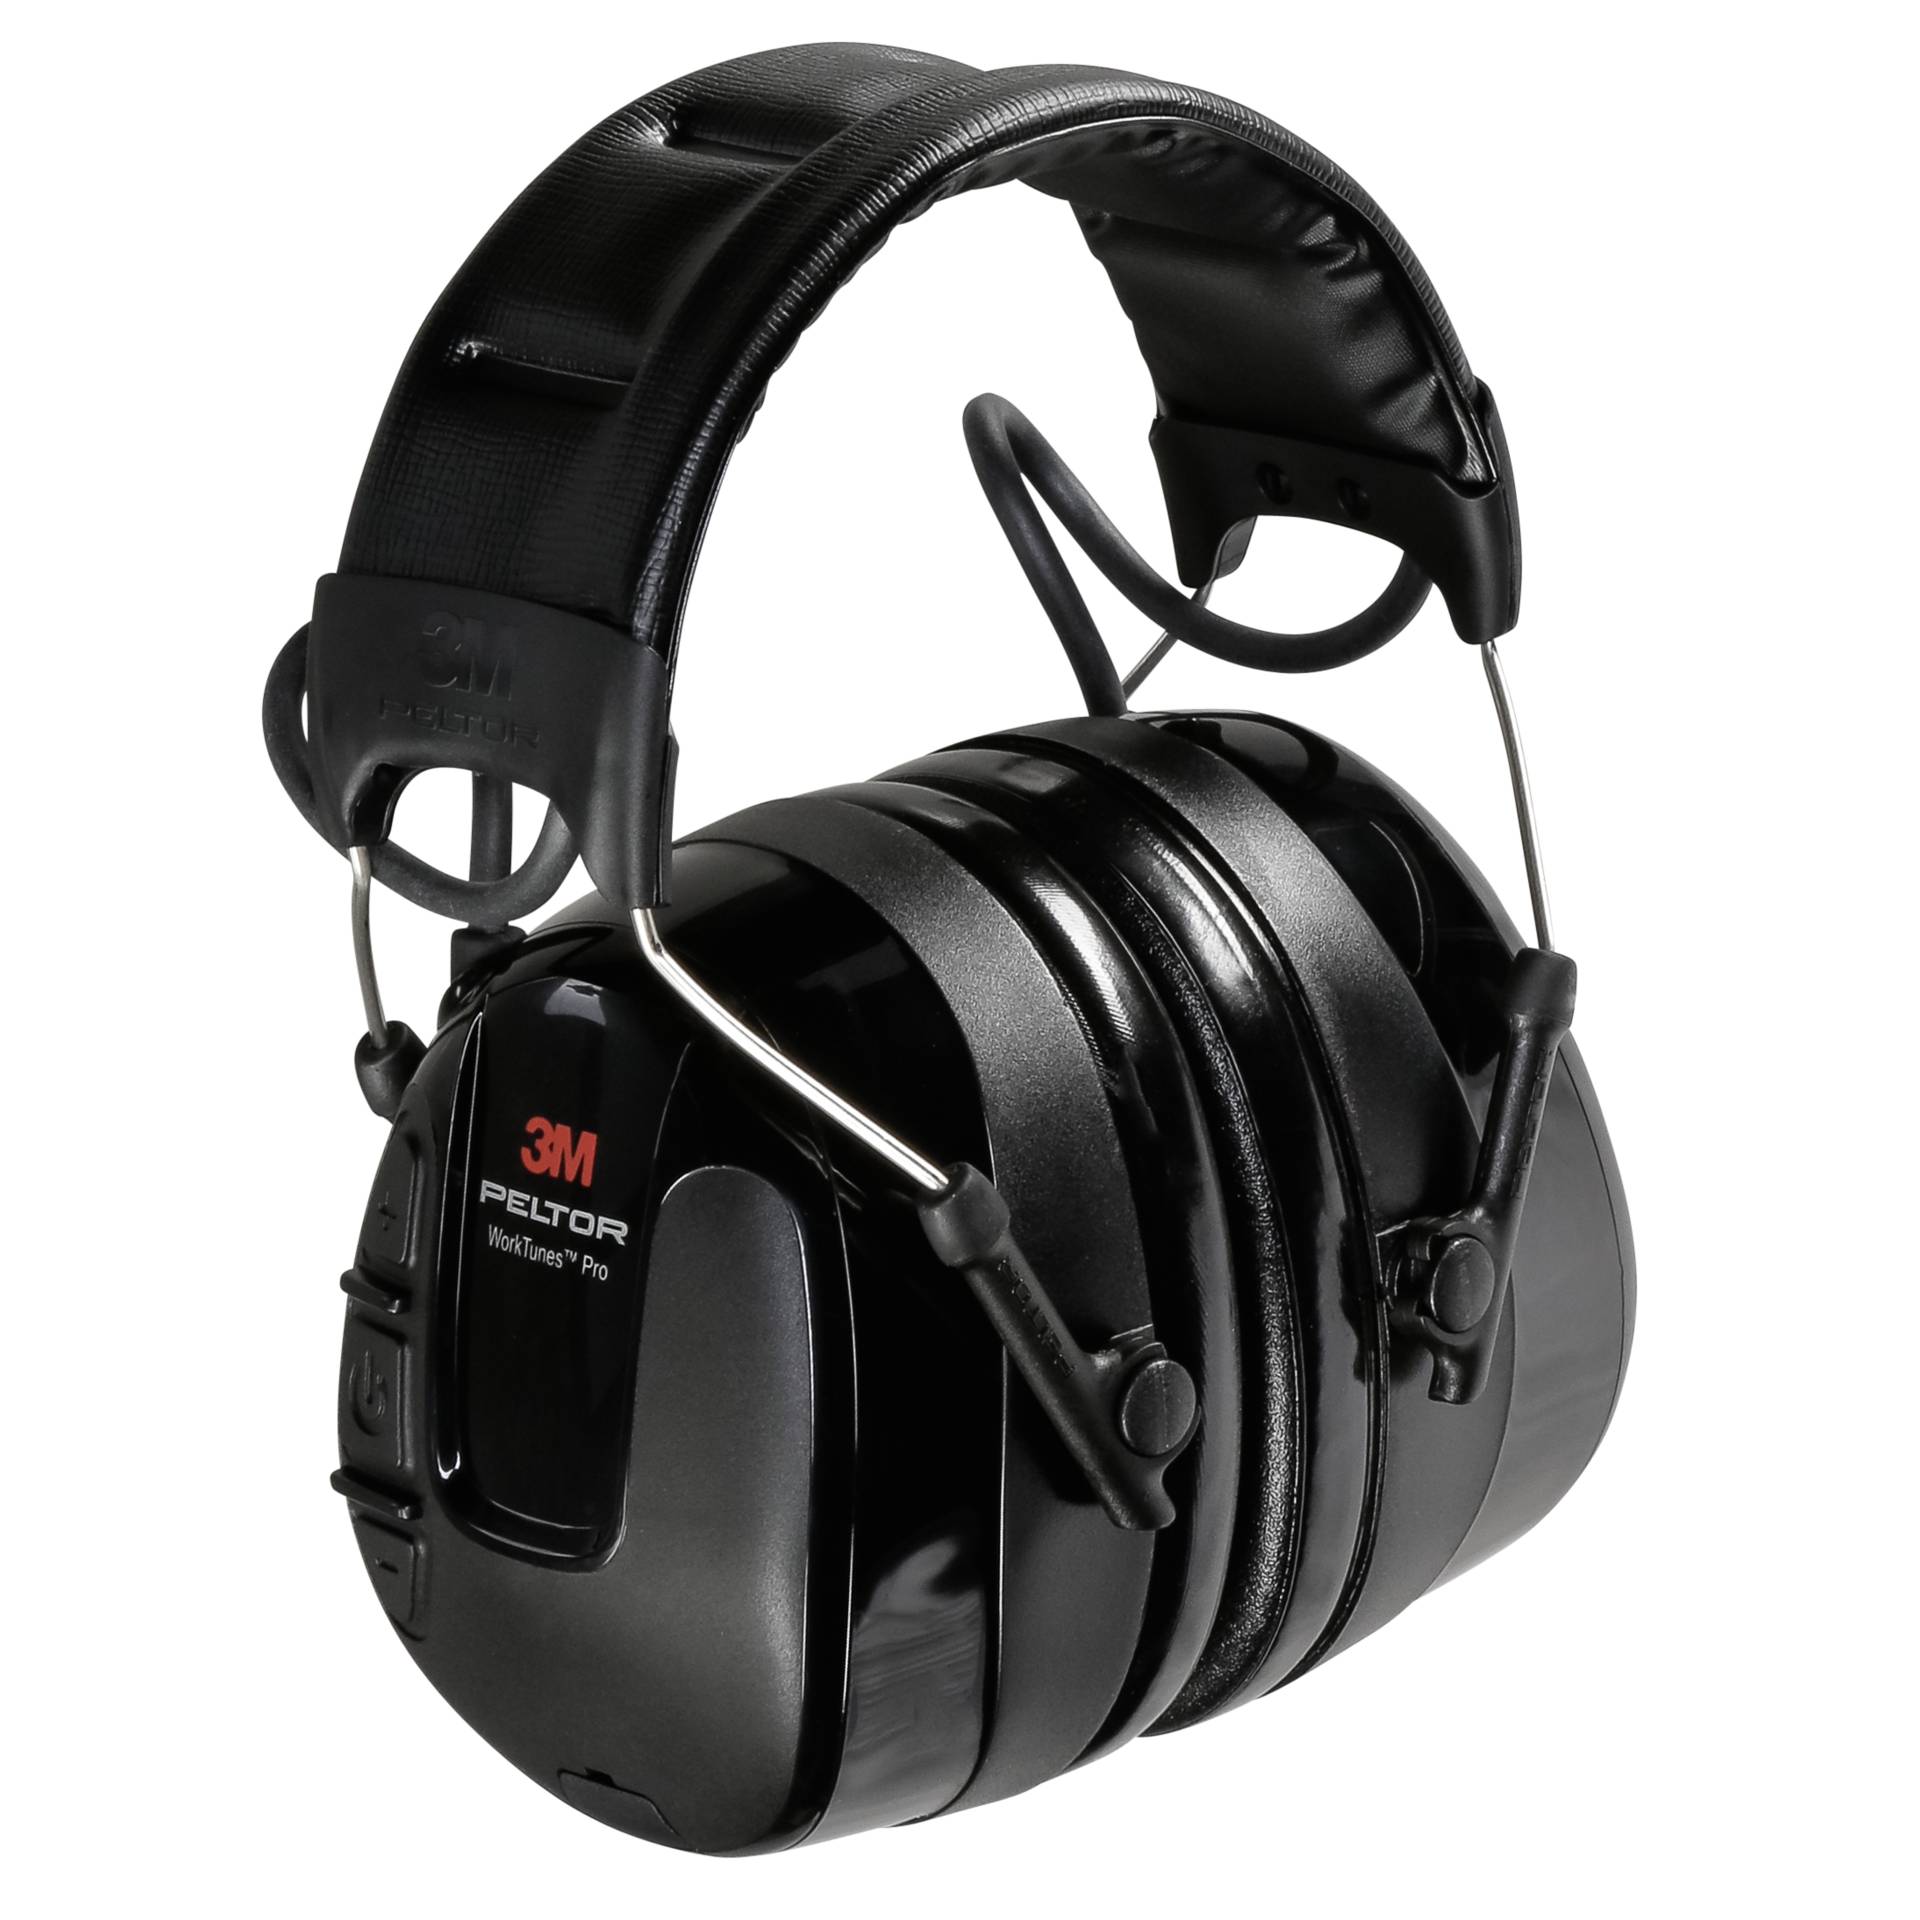 Peltor HRXS220A WorkTunes Pro FM Radio headband